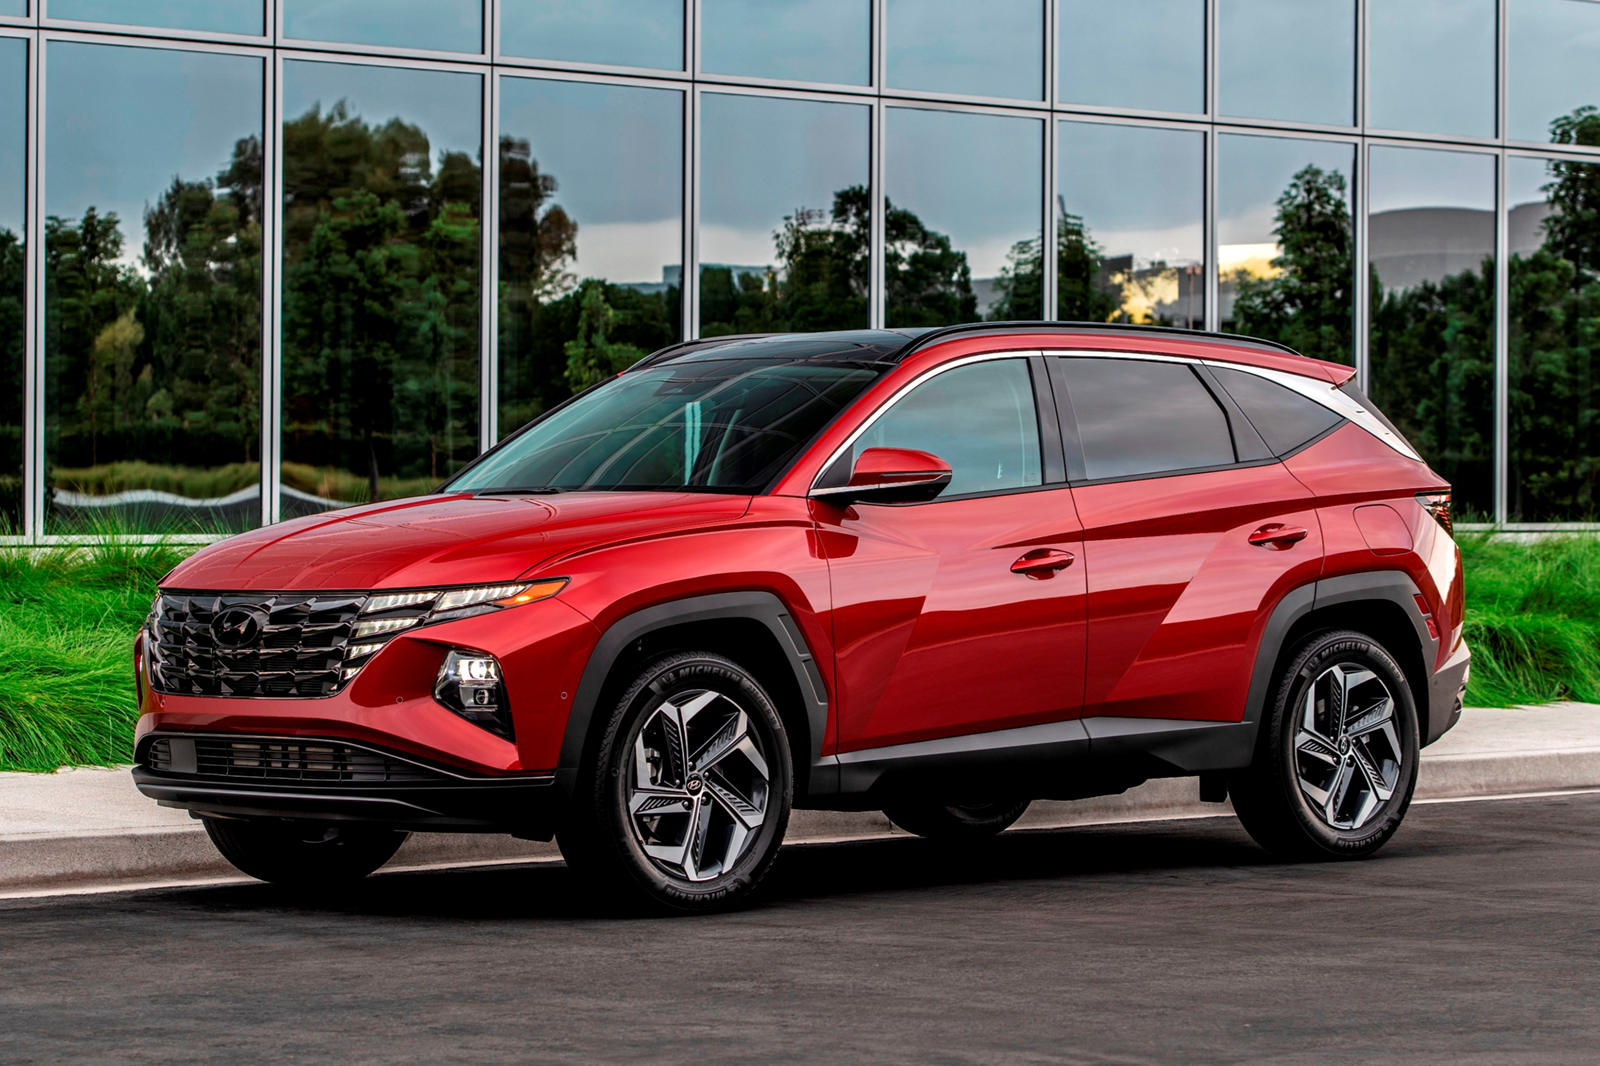 2022 Hyundai Tucson Limited AWD Review